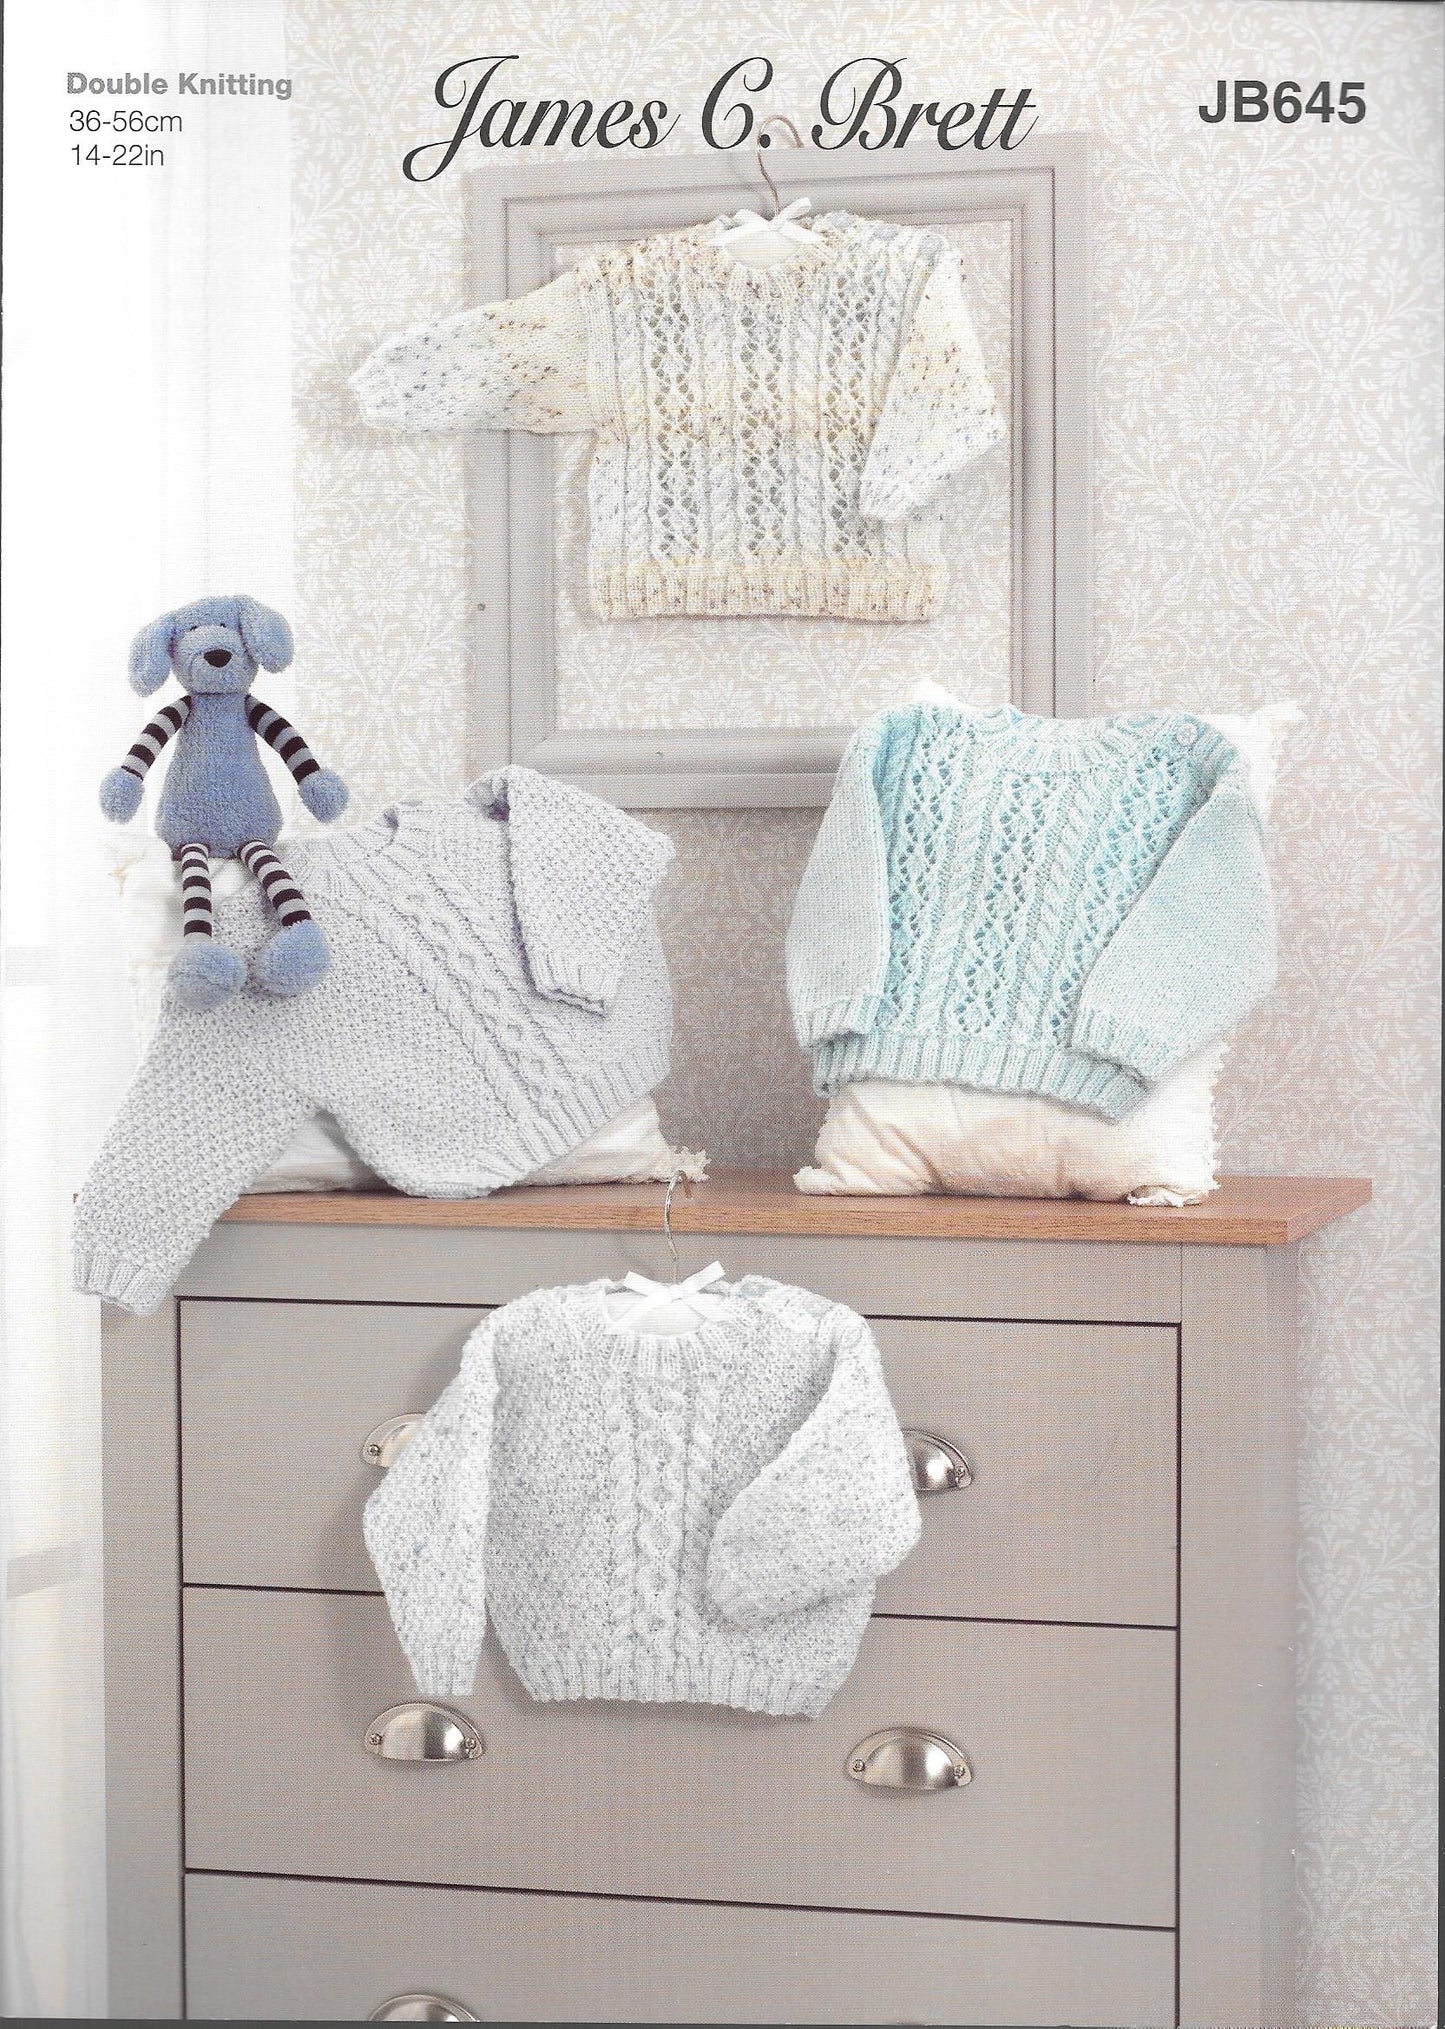 645 JB645 James C Brett Rainbow Sprinkles and Innocence DK baby sweaters knitting pattern